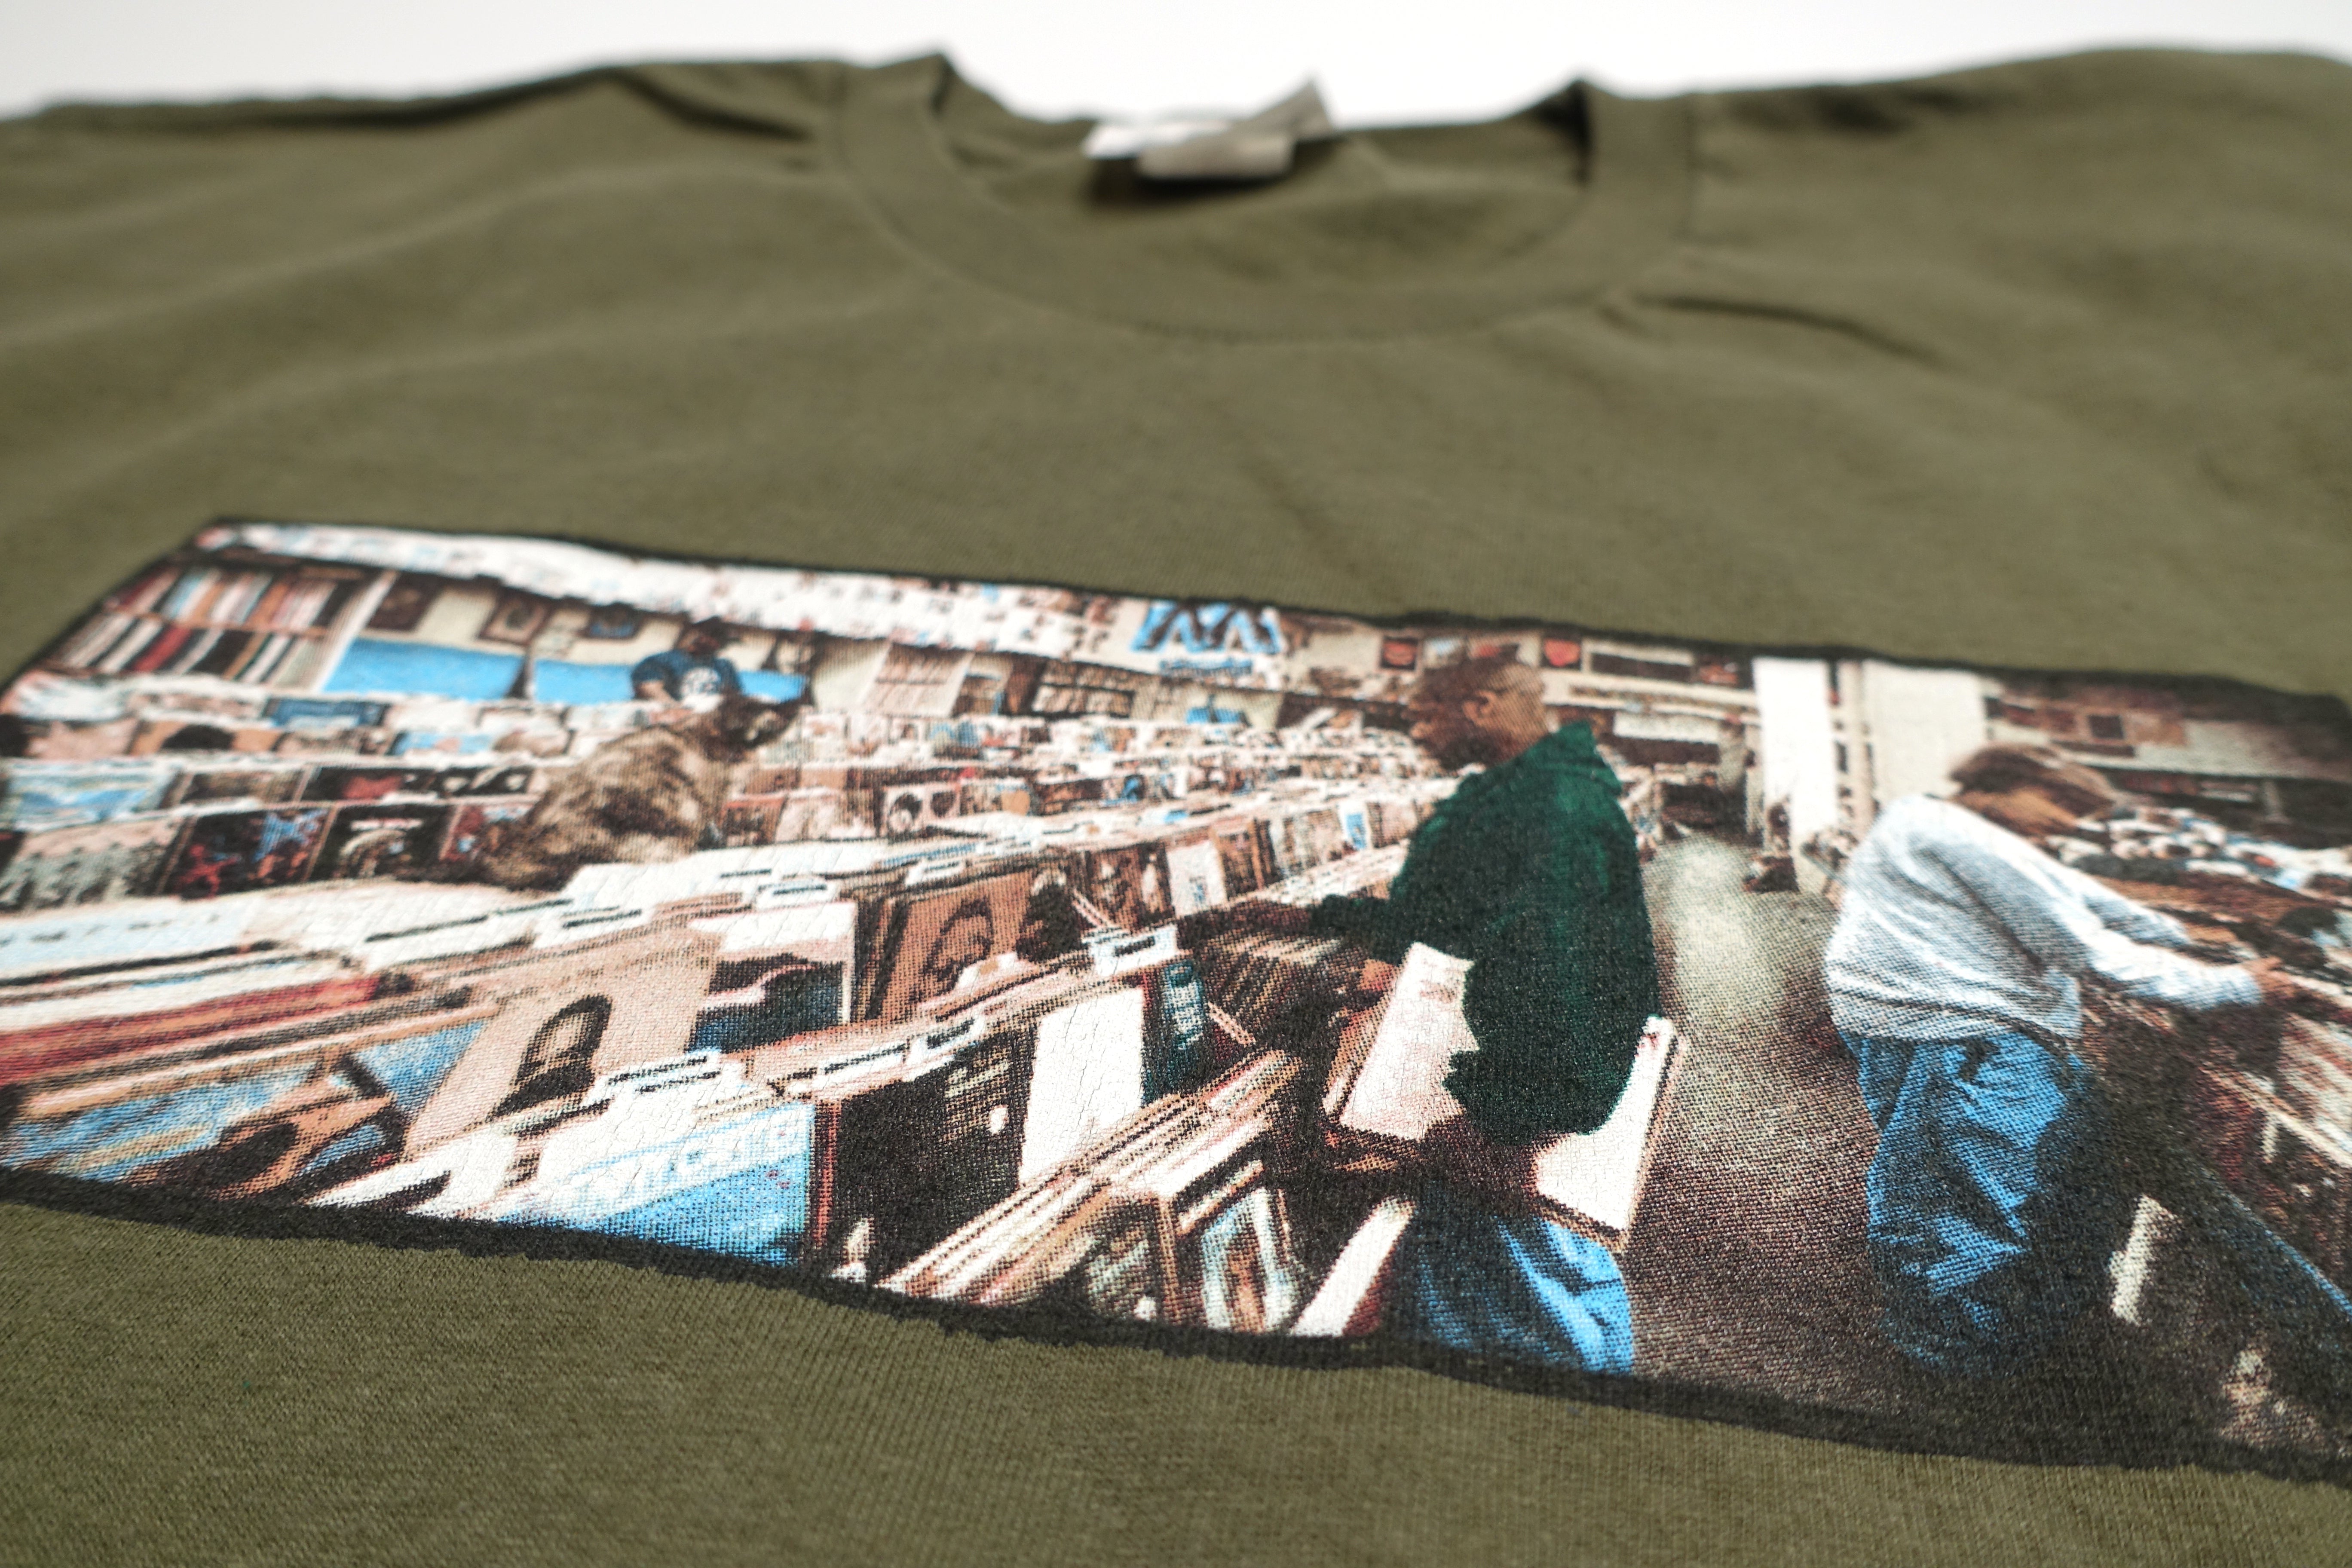 DJ Shadow - Entroducing 20th Anniversary Shirt Size Large